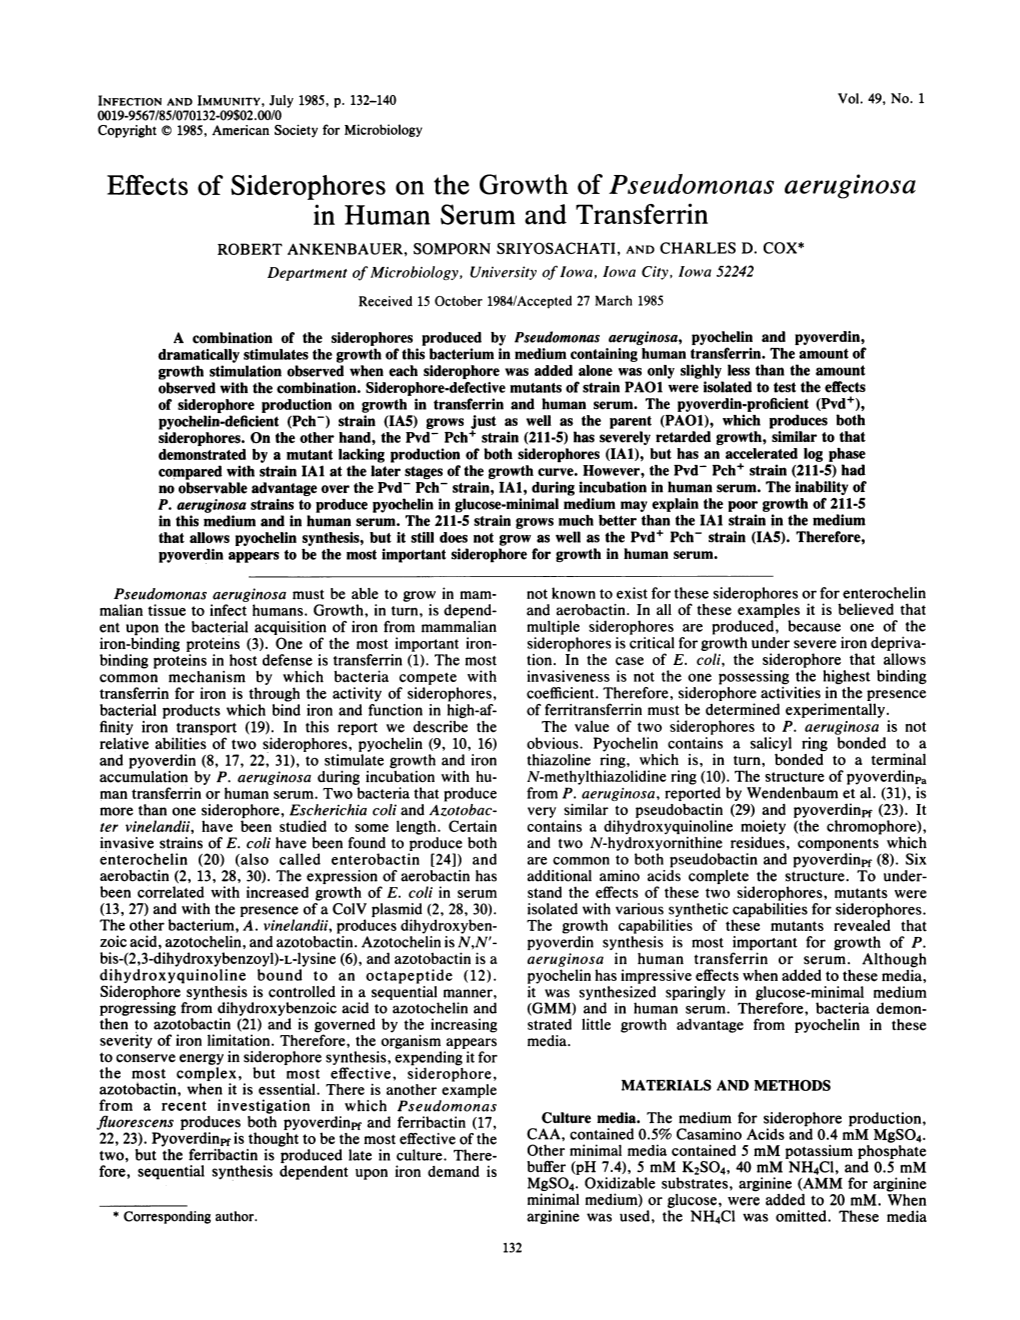 Effects of Siderophores on the Growth of Pseudomonas Aeruginosa in Human Serum and Transferrin ROBERT ANKENBAUER, SOMPORN SRIYOSACHATI, and CHARLES D